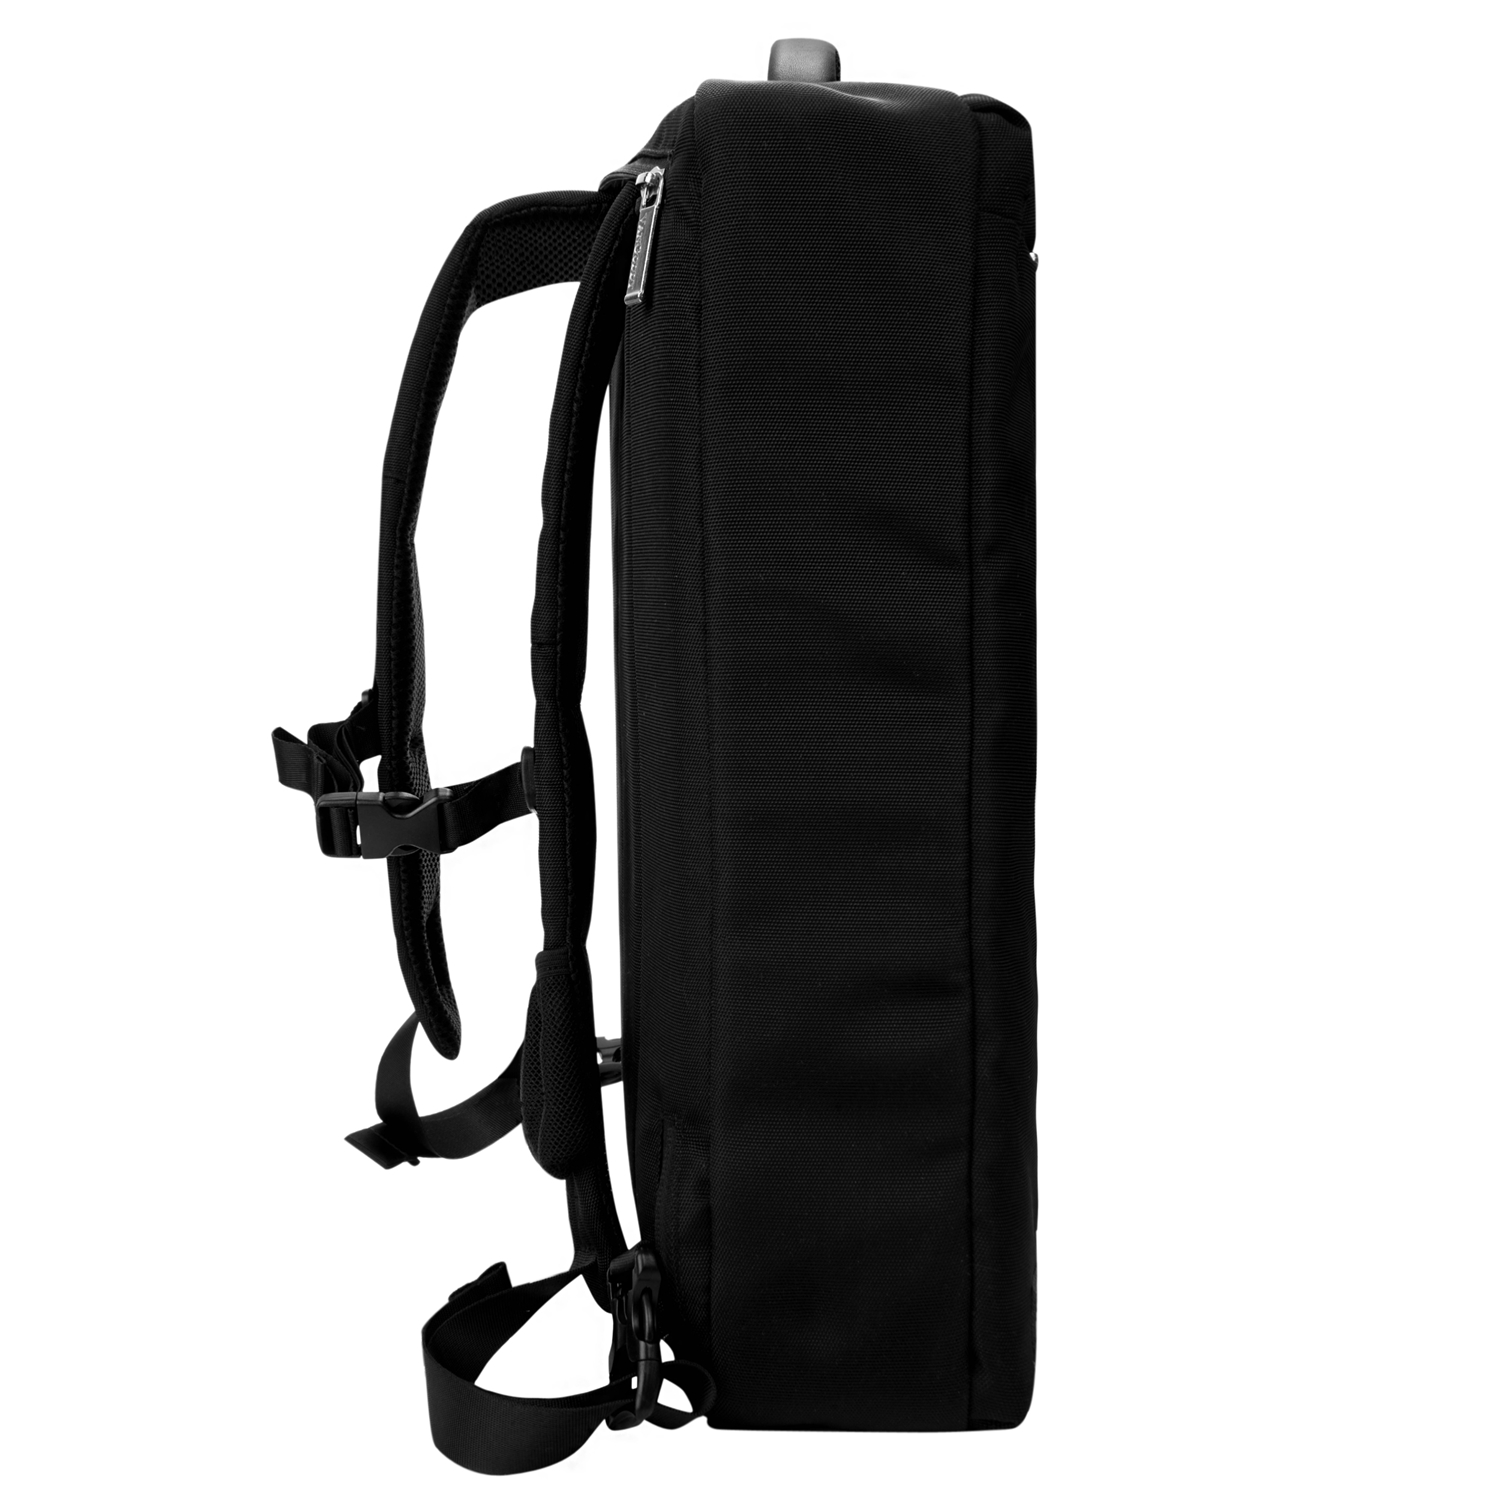 (Black) Vangoddy Slate Laptop Bag 17         